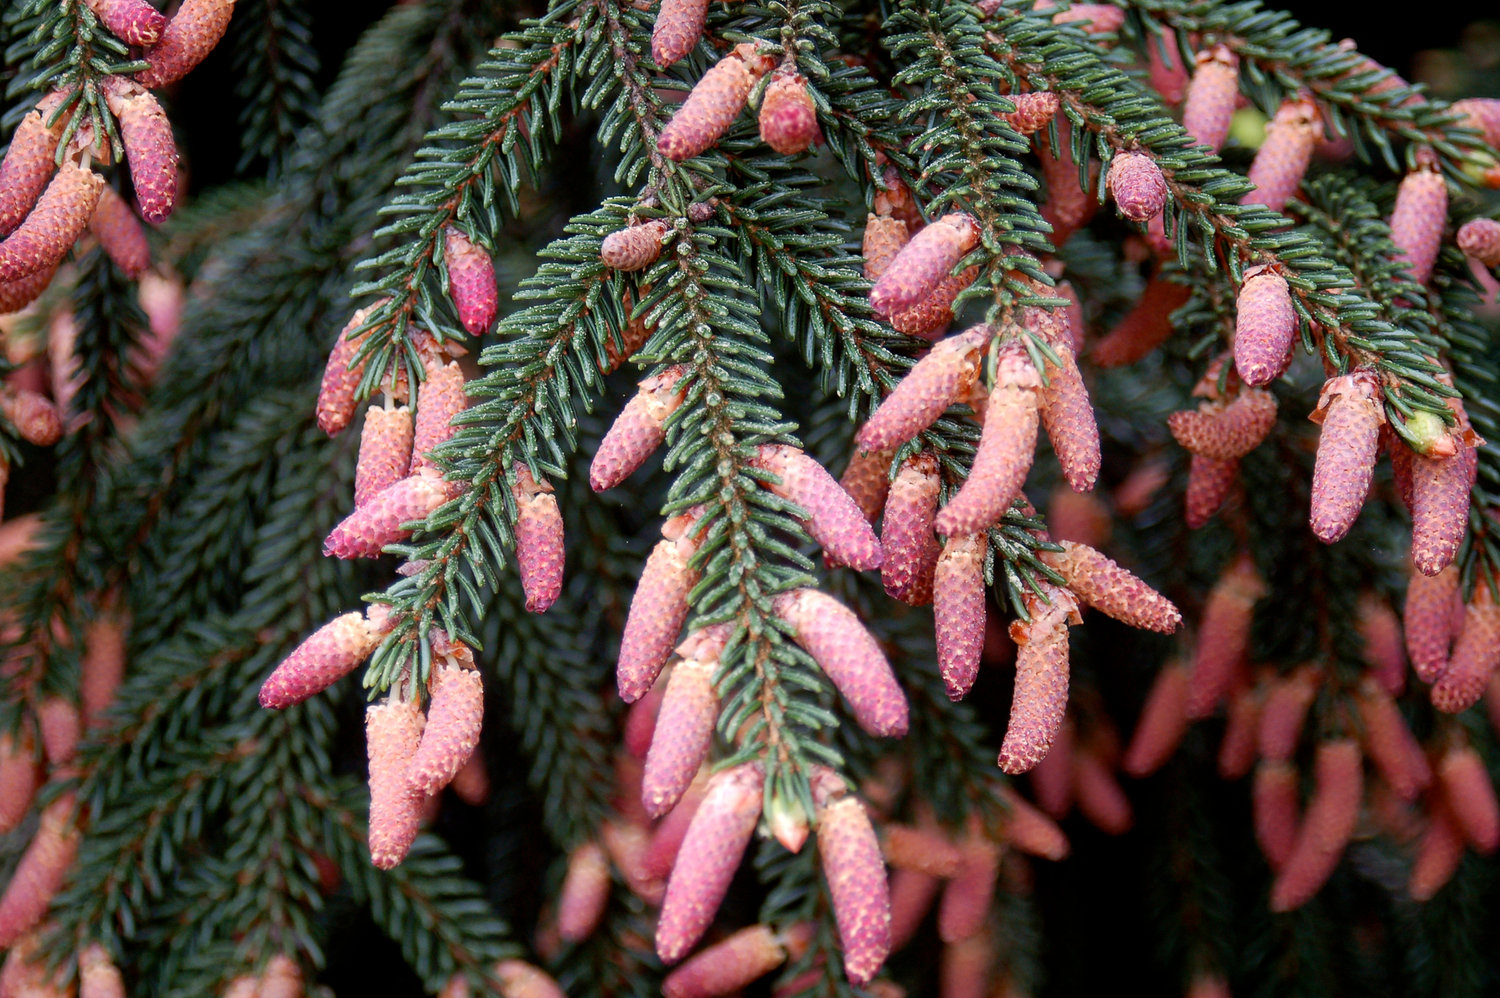 The showy, long purple cones of an Oriental spruce (Picea orientalis) tree.